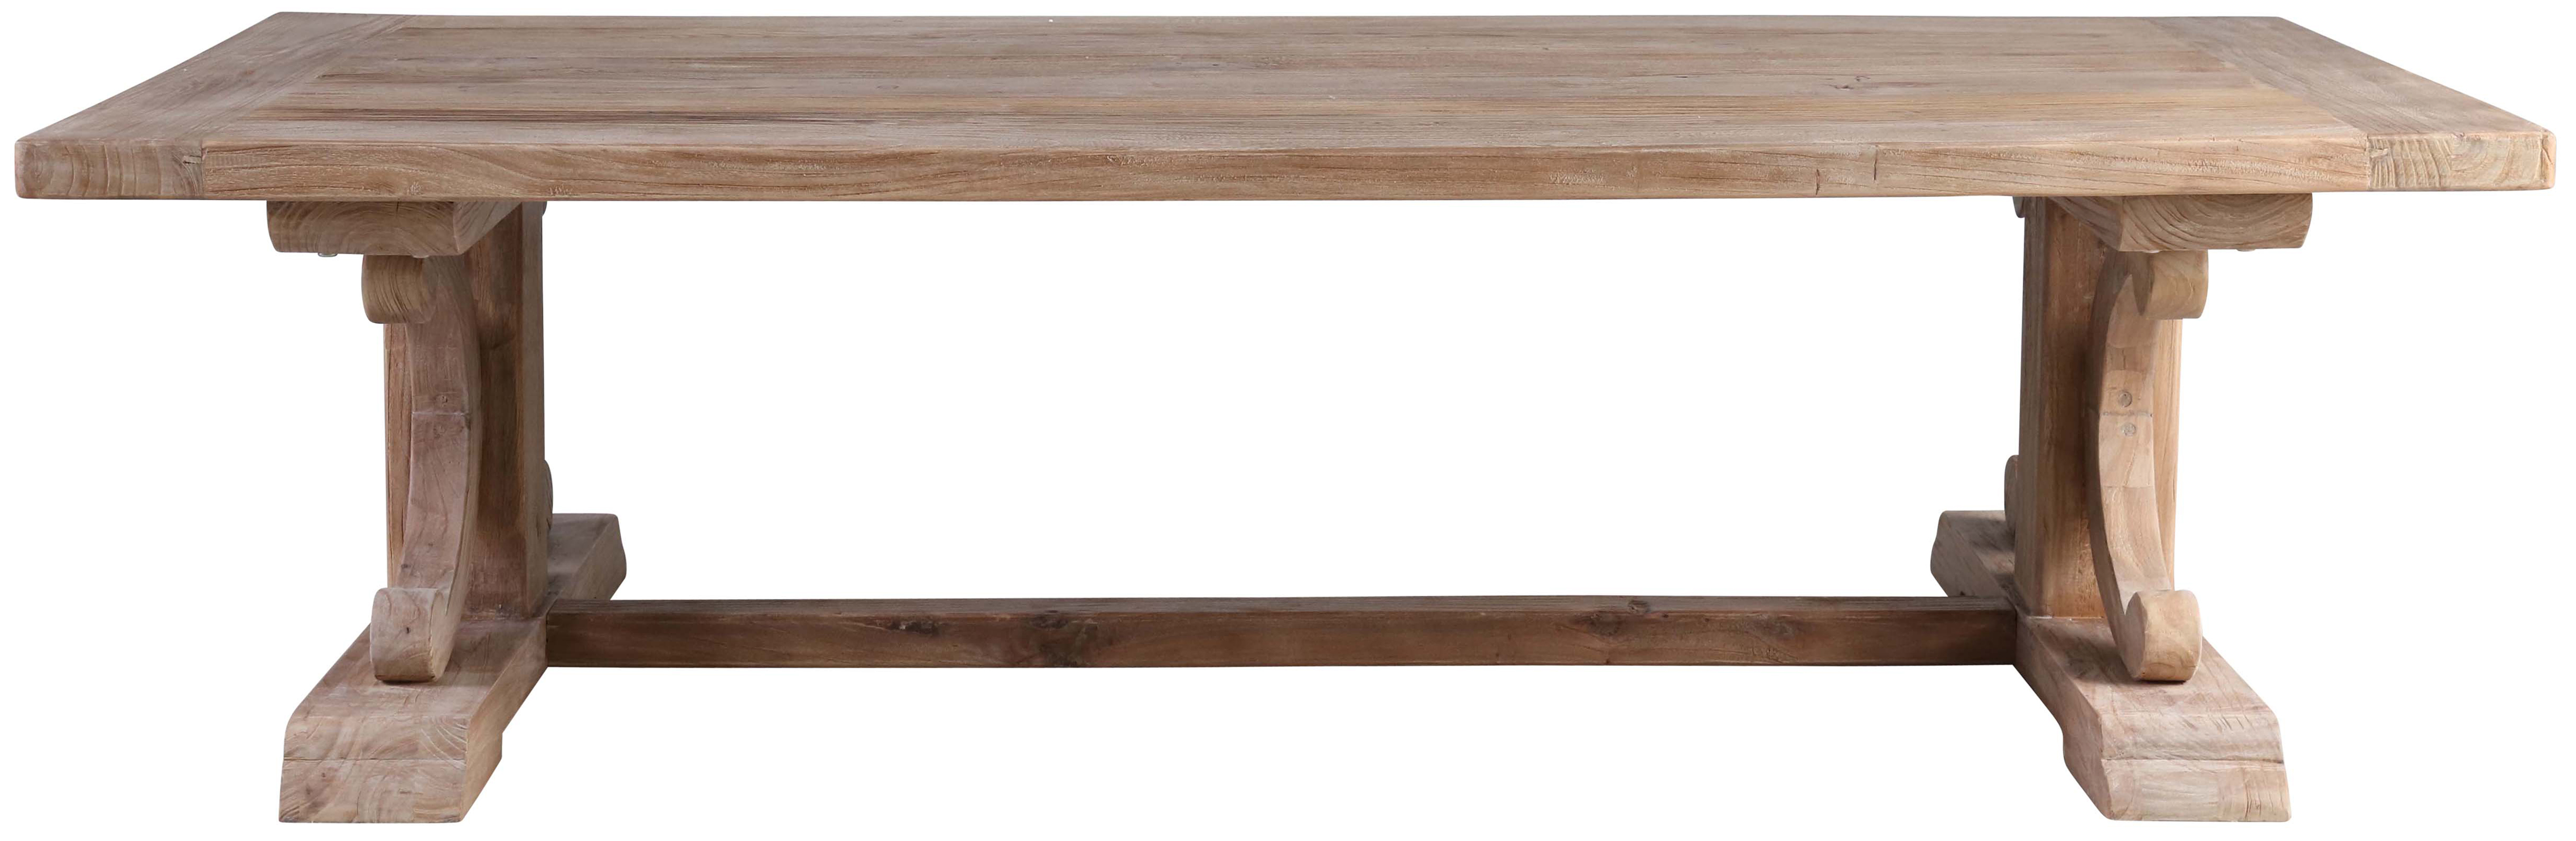 Block & Chisel rectangular wooden coffee table